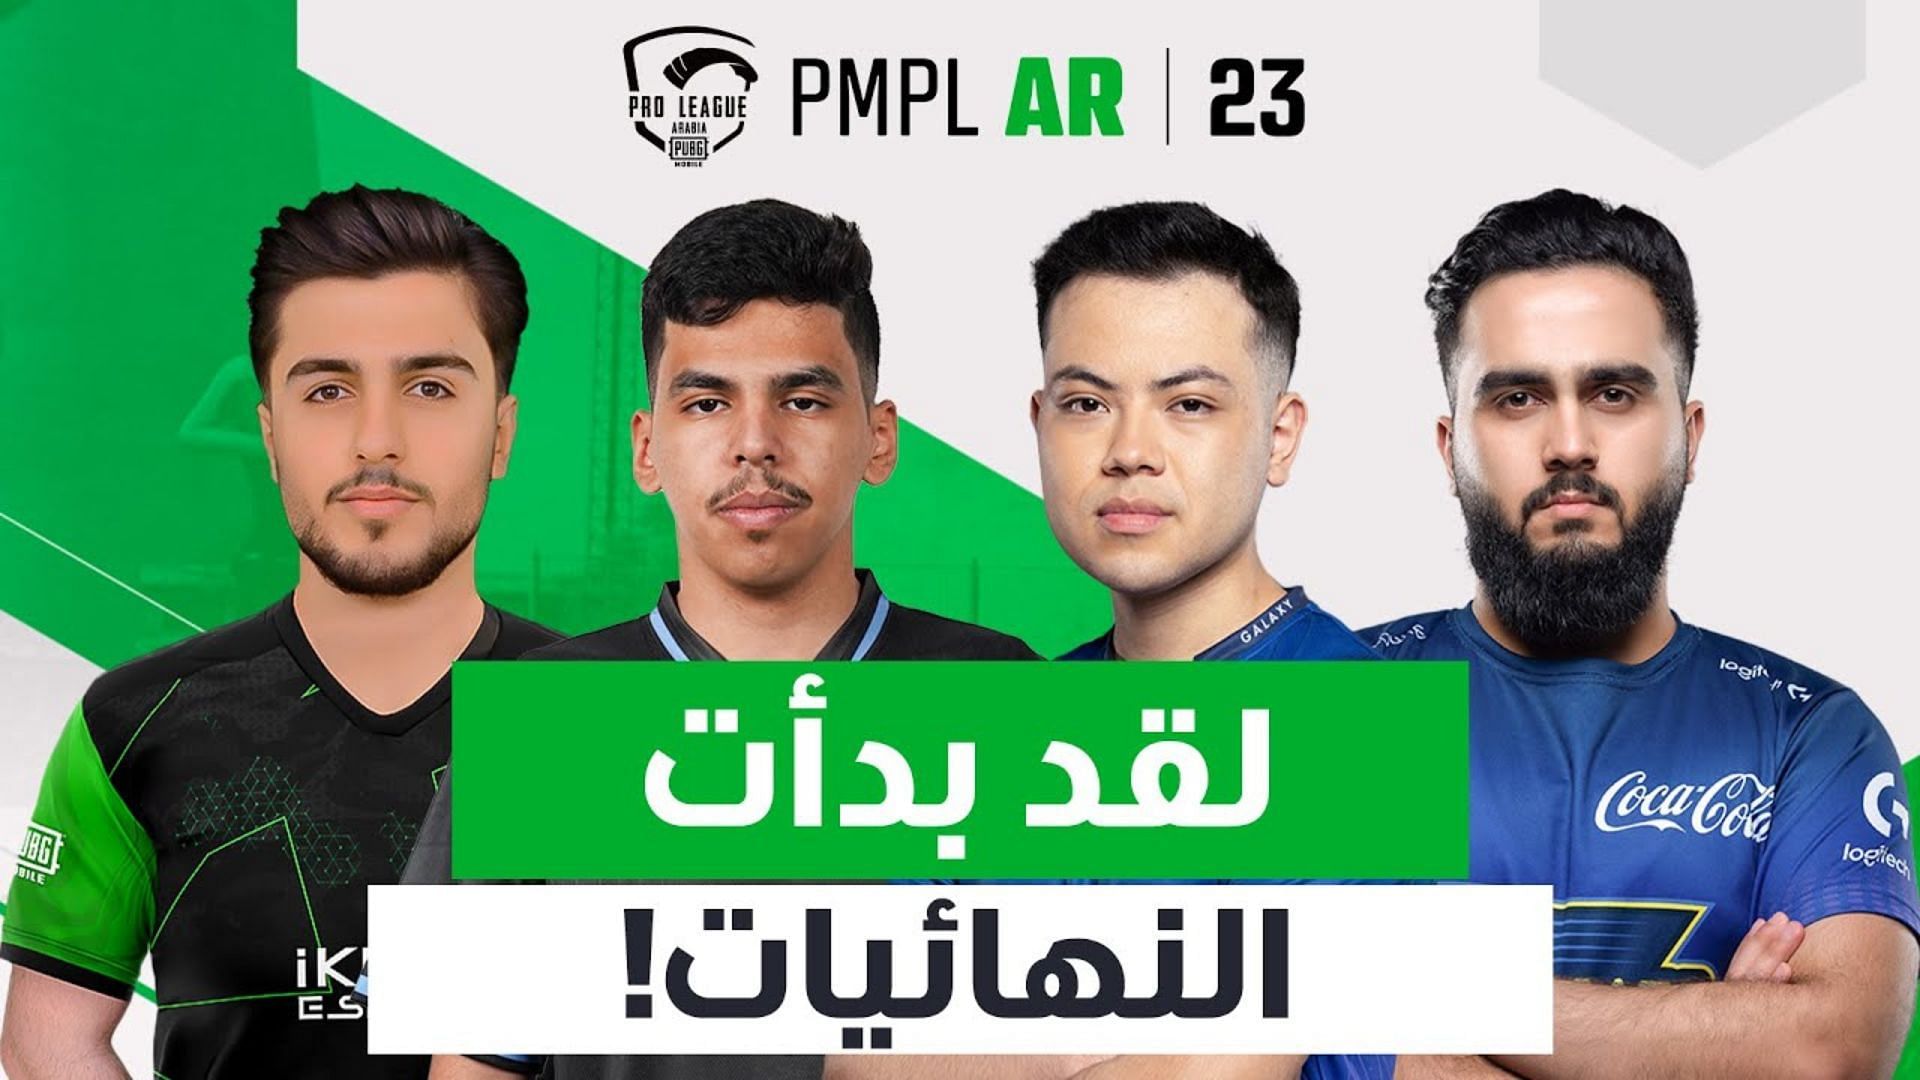 PMPL Arabia Finals starts on June 1 (Image via PUBG Mobile)